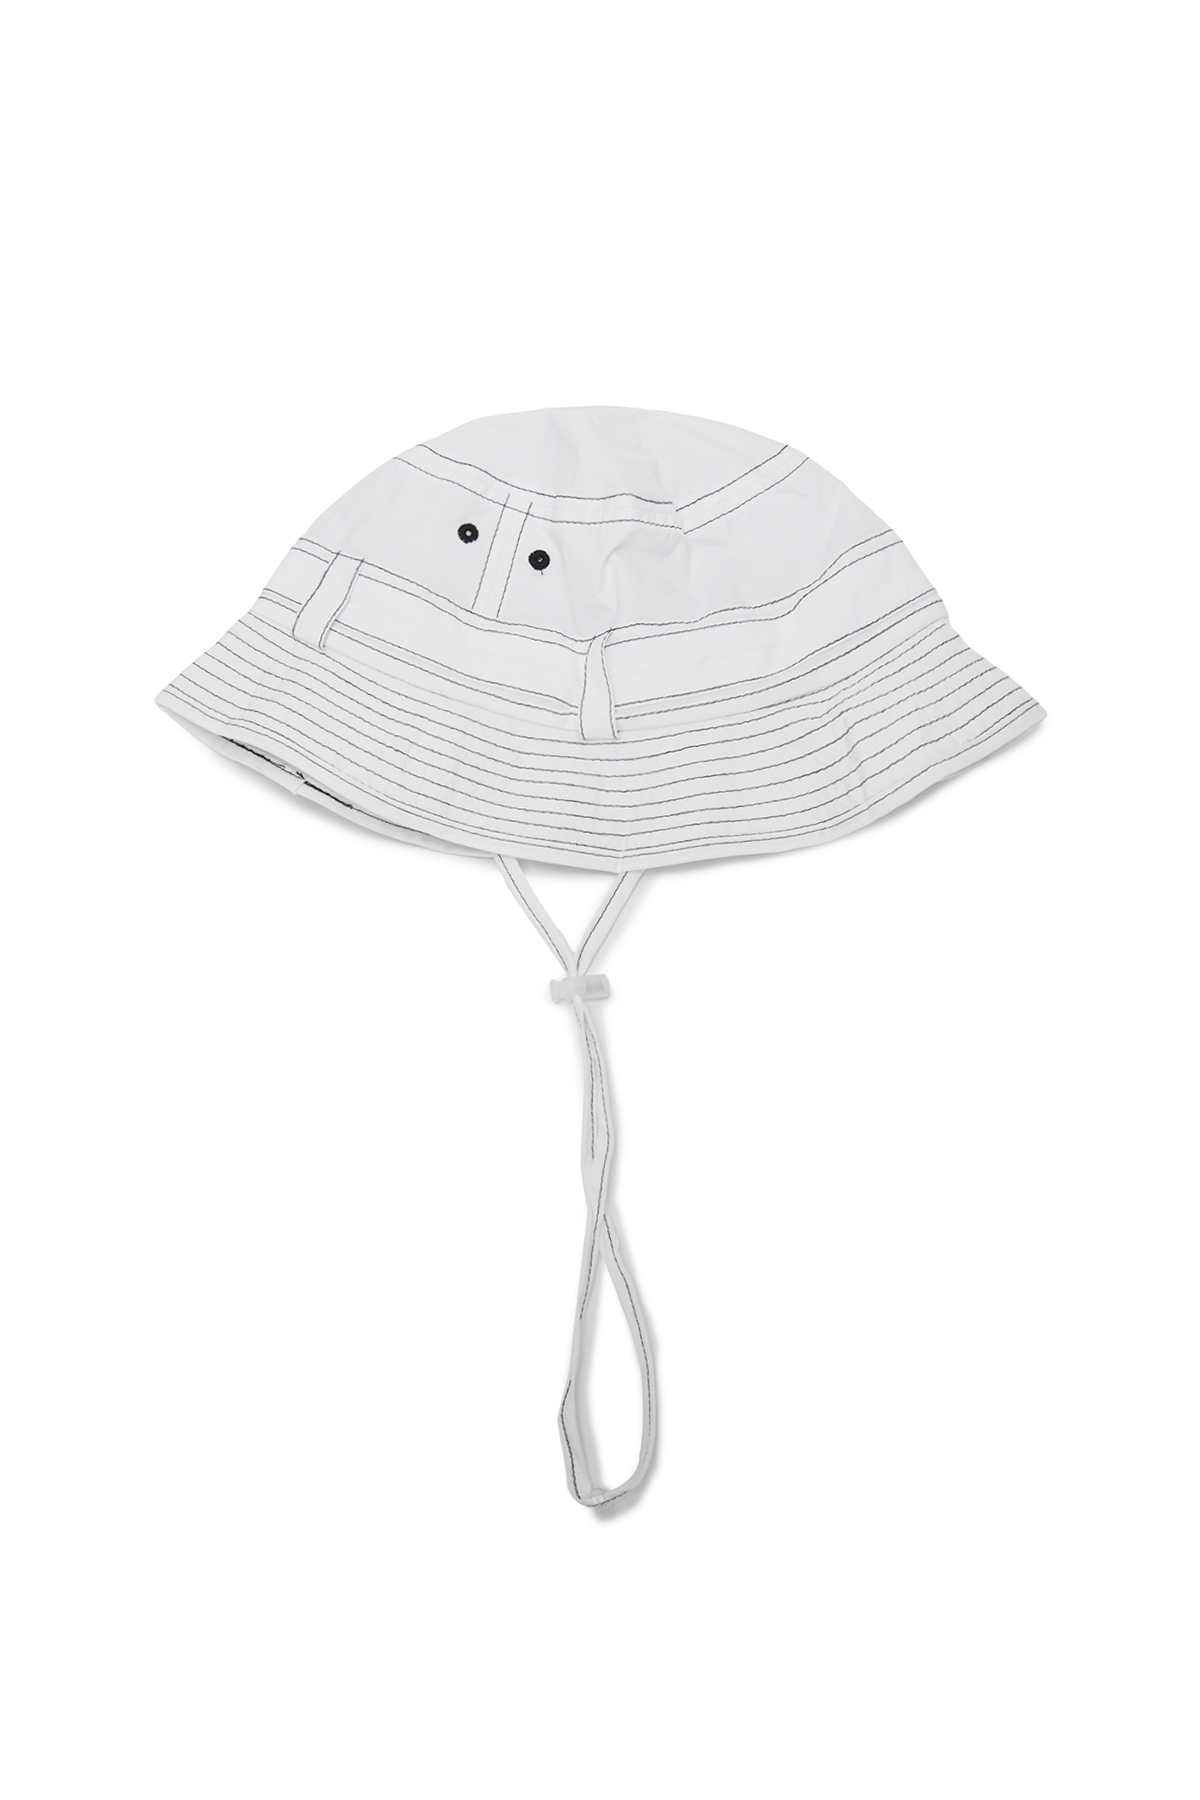 MATIN STITCH SAFARI BUCKET HAT IN WHITE